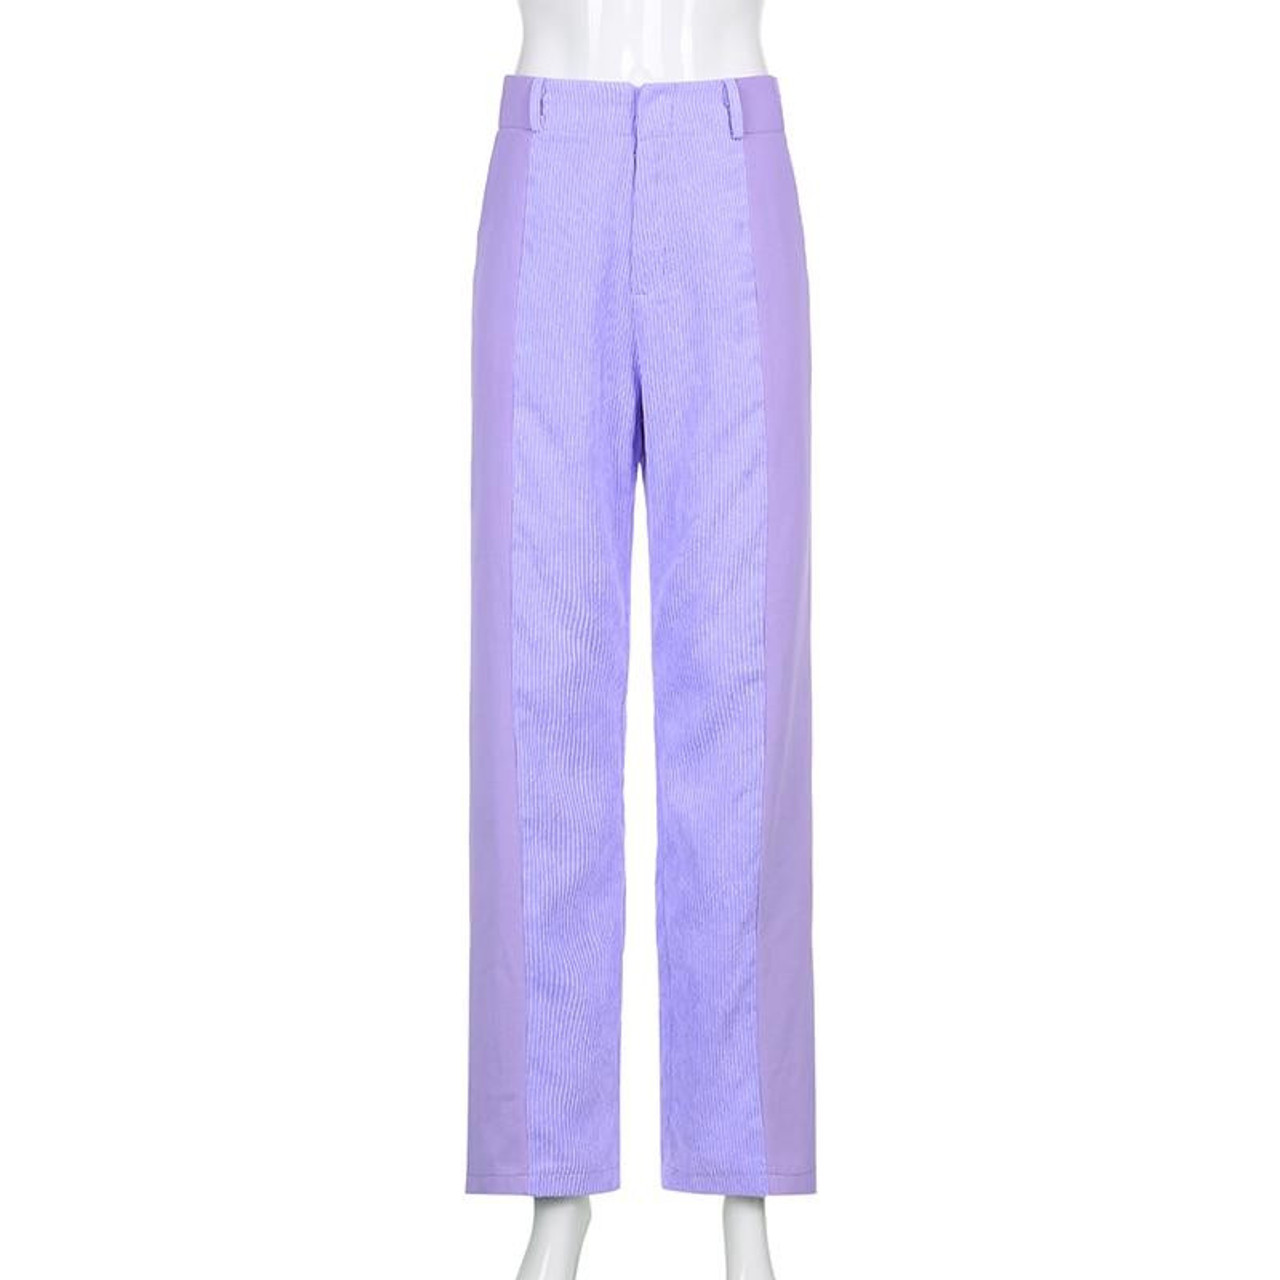 Y2K Aesthetic Outfits Fashion Grunge Clothing - Aesthetic Clothes Style - Y2k  Aesthetic High Waist Corduroy Purple Pants - Y2kaesthetic